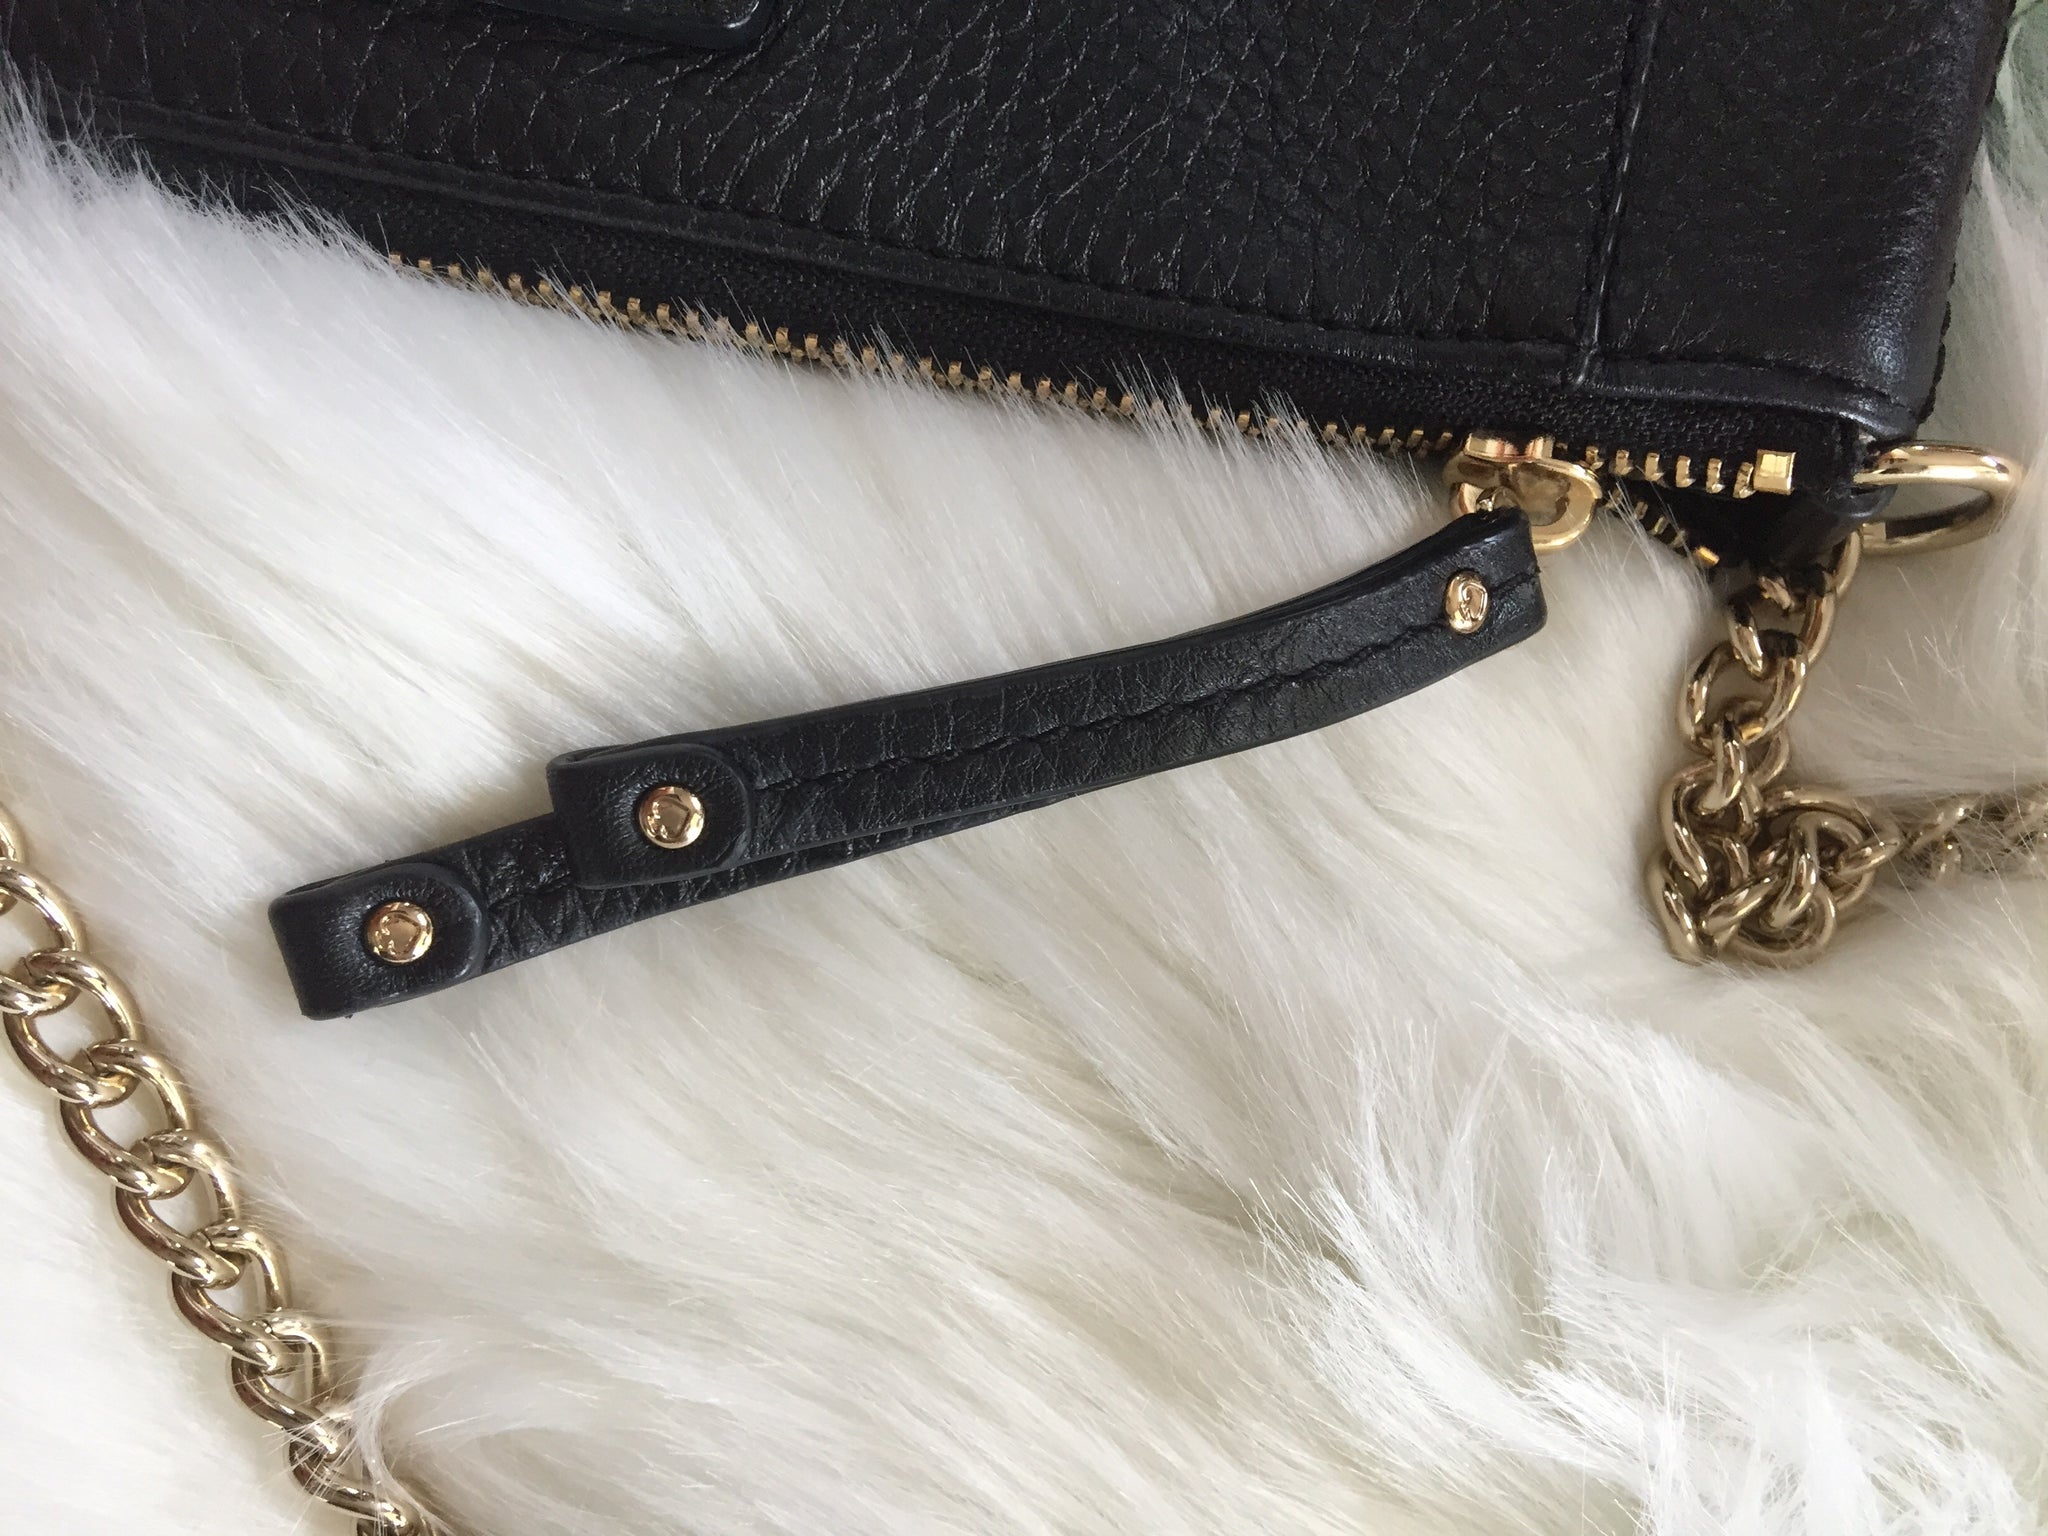 Kate Spade Black Leather Gold Chain Bag - New! – Designer Fashion Brands 4  Less